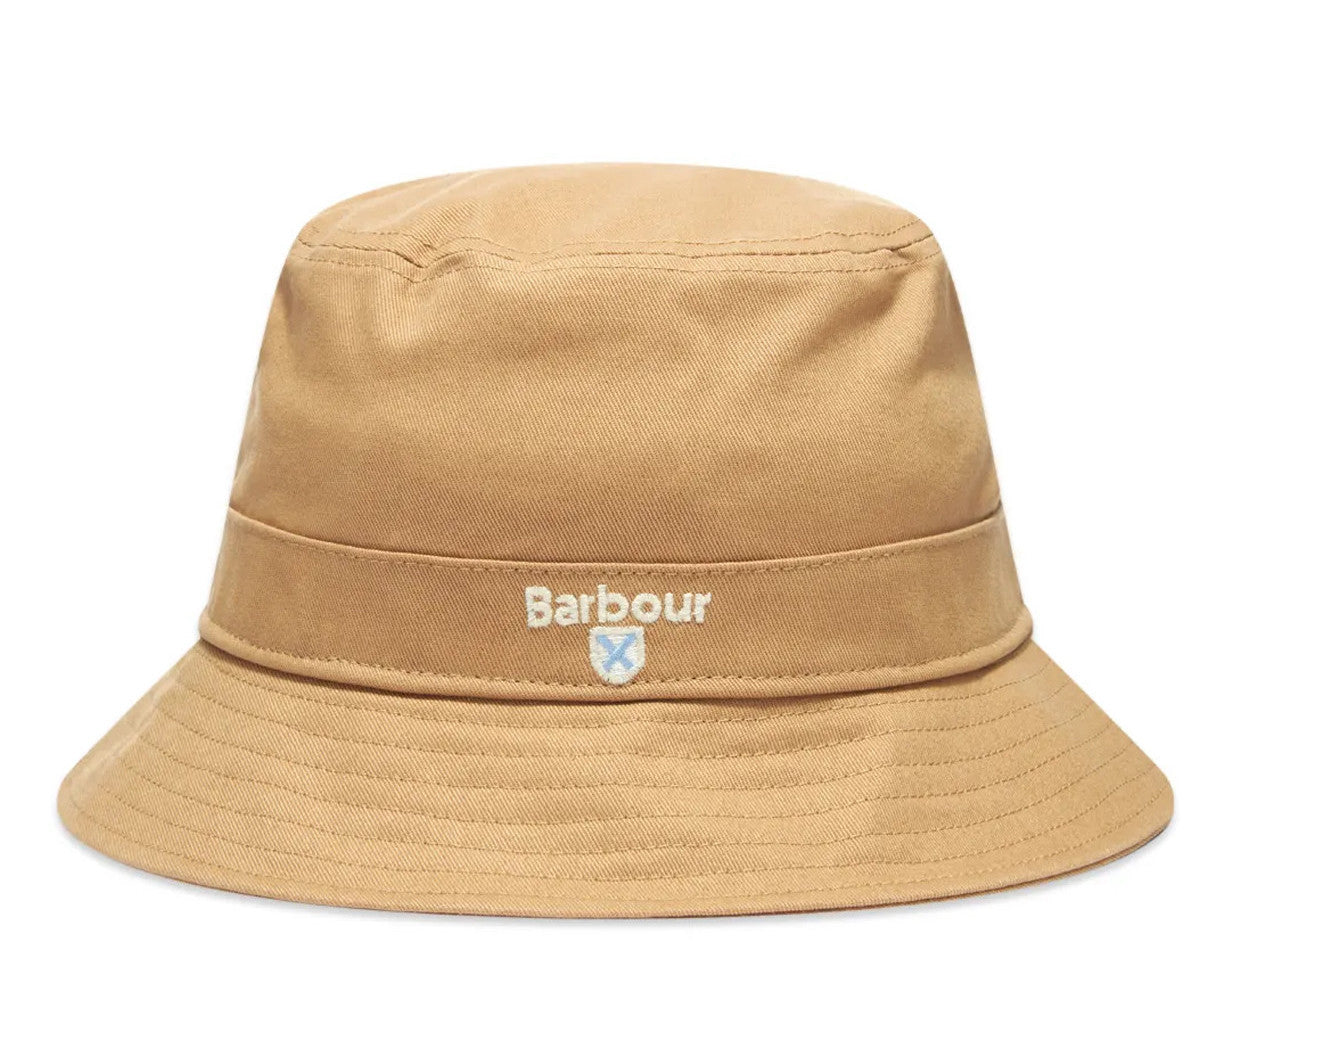 Barbour Cascade Bucket Hat in Stone Beige MHA0615 ST51